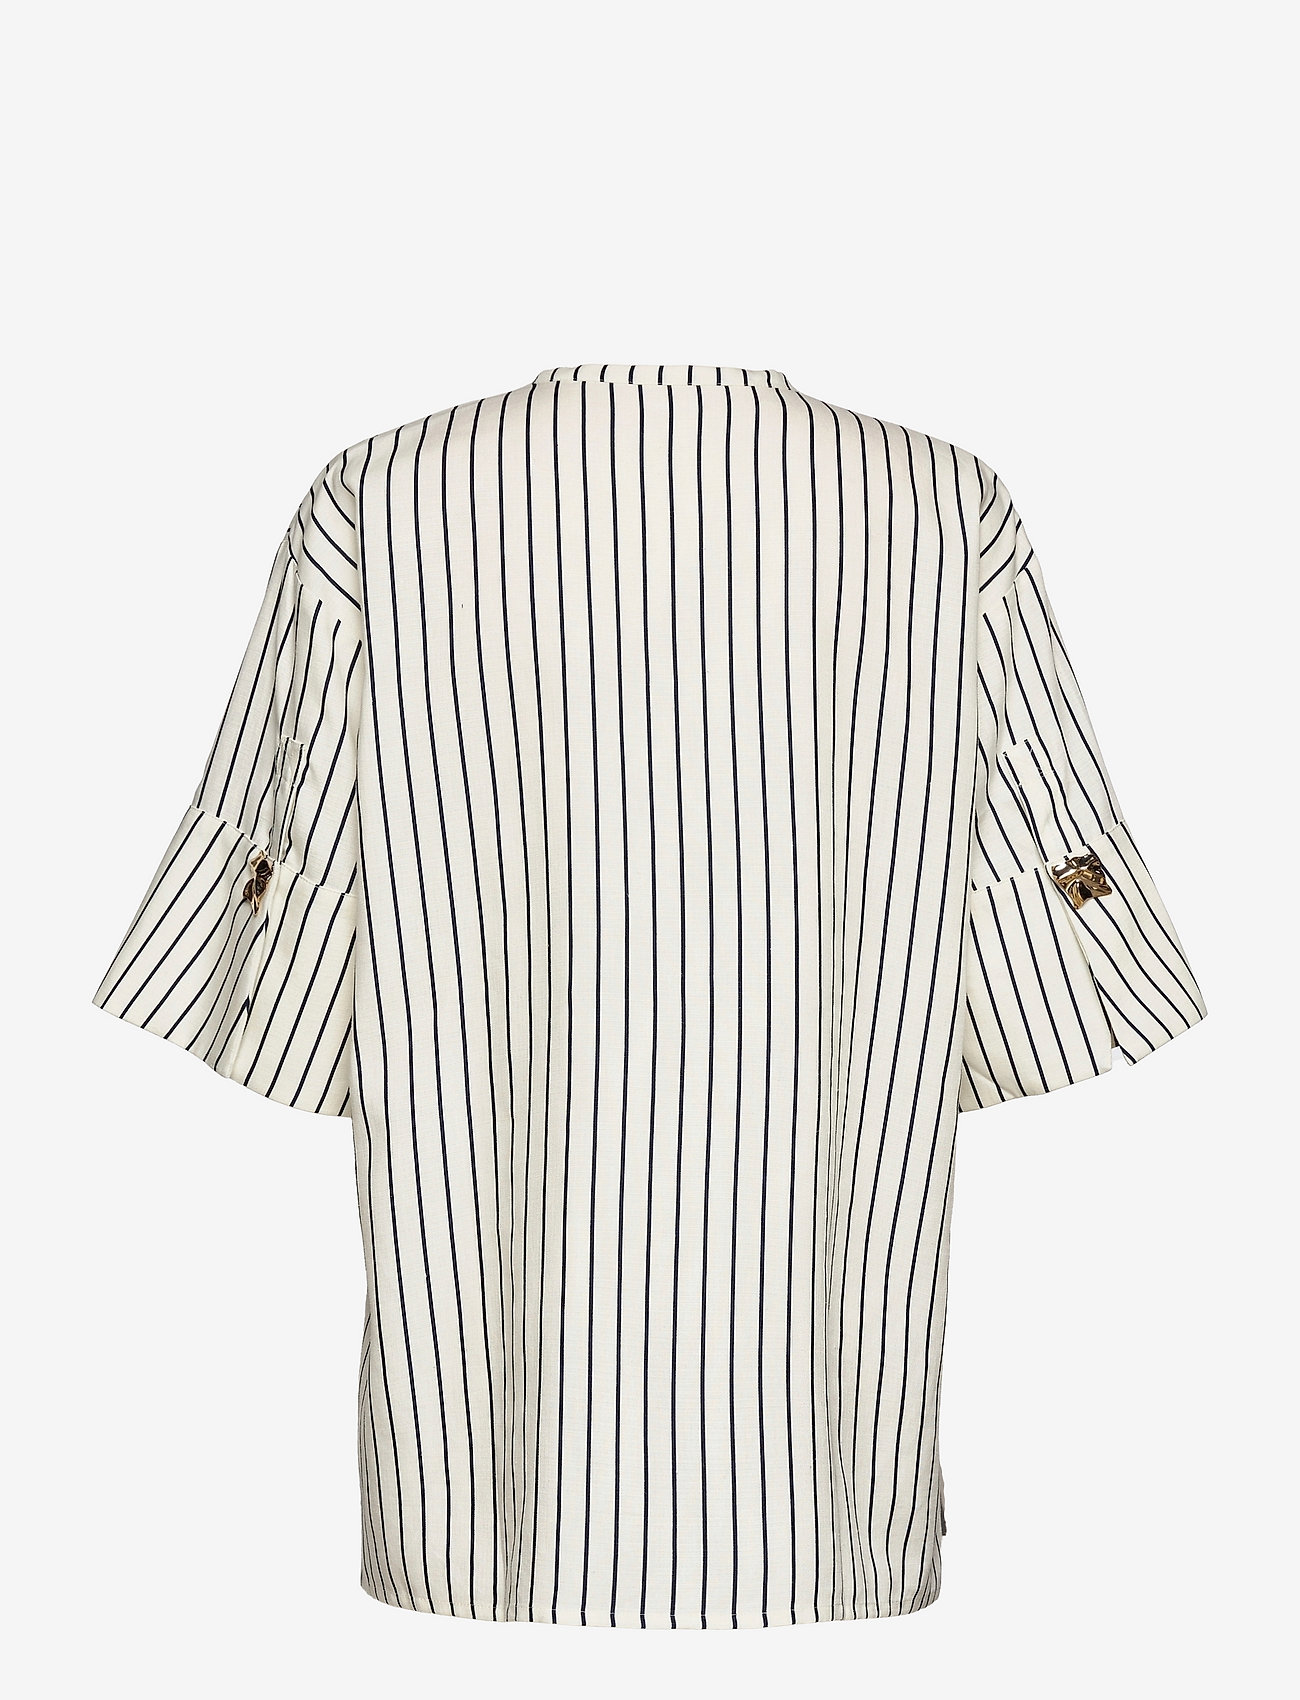 Mother of Pearl - JADE SHIRT - blouses korte mouwen - navy/white stripes - 1